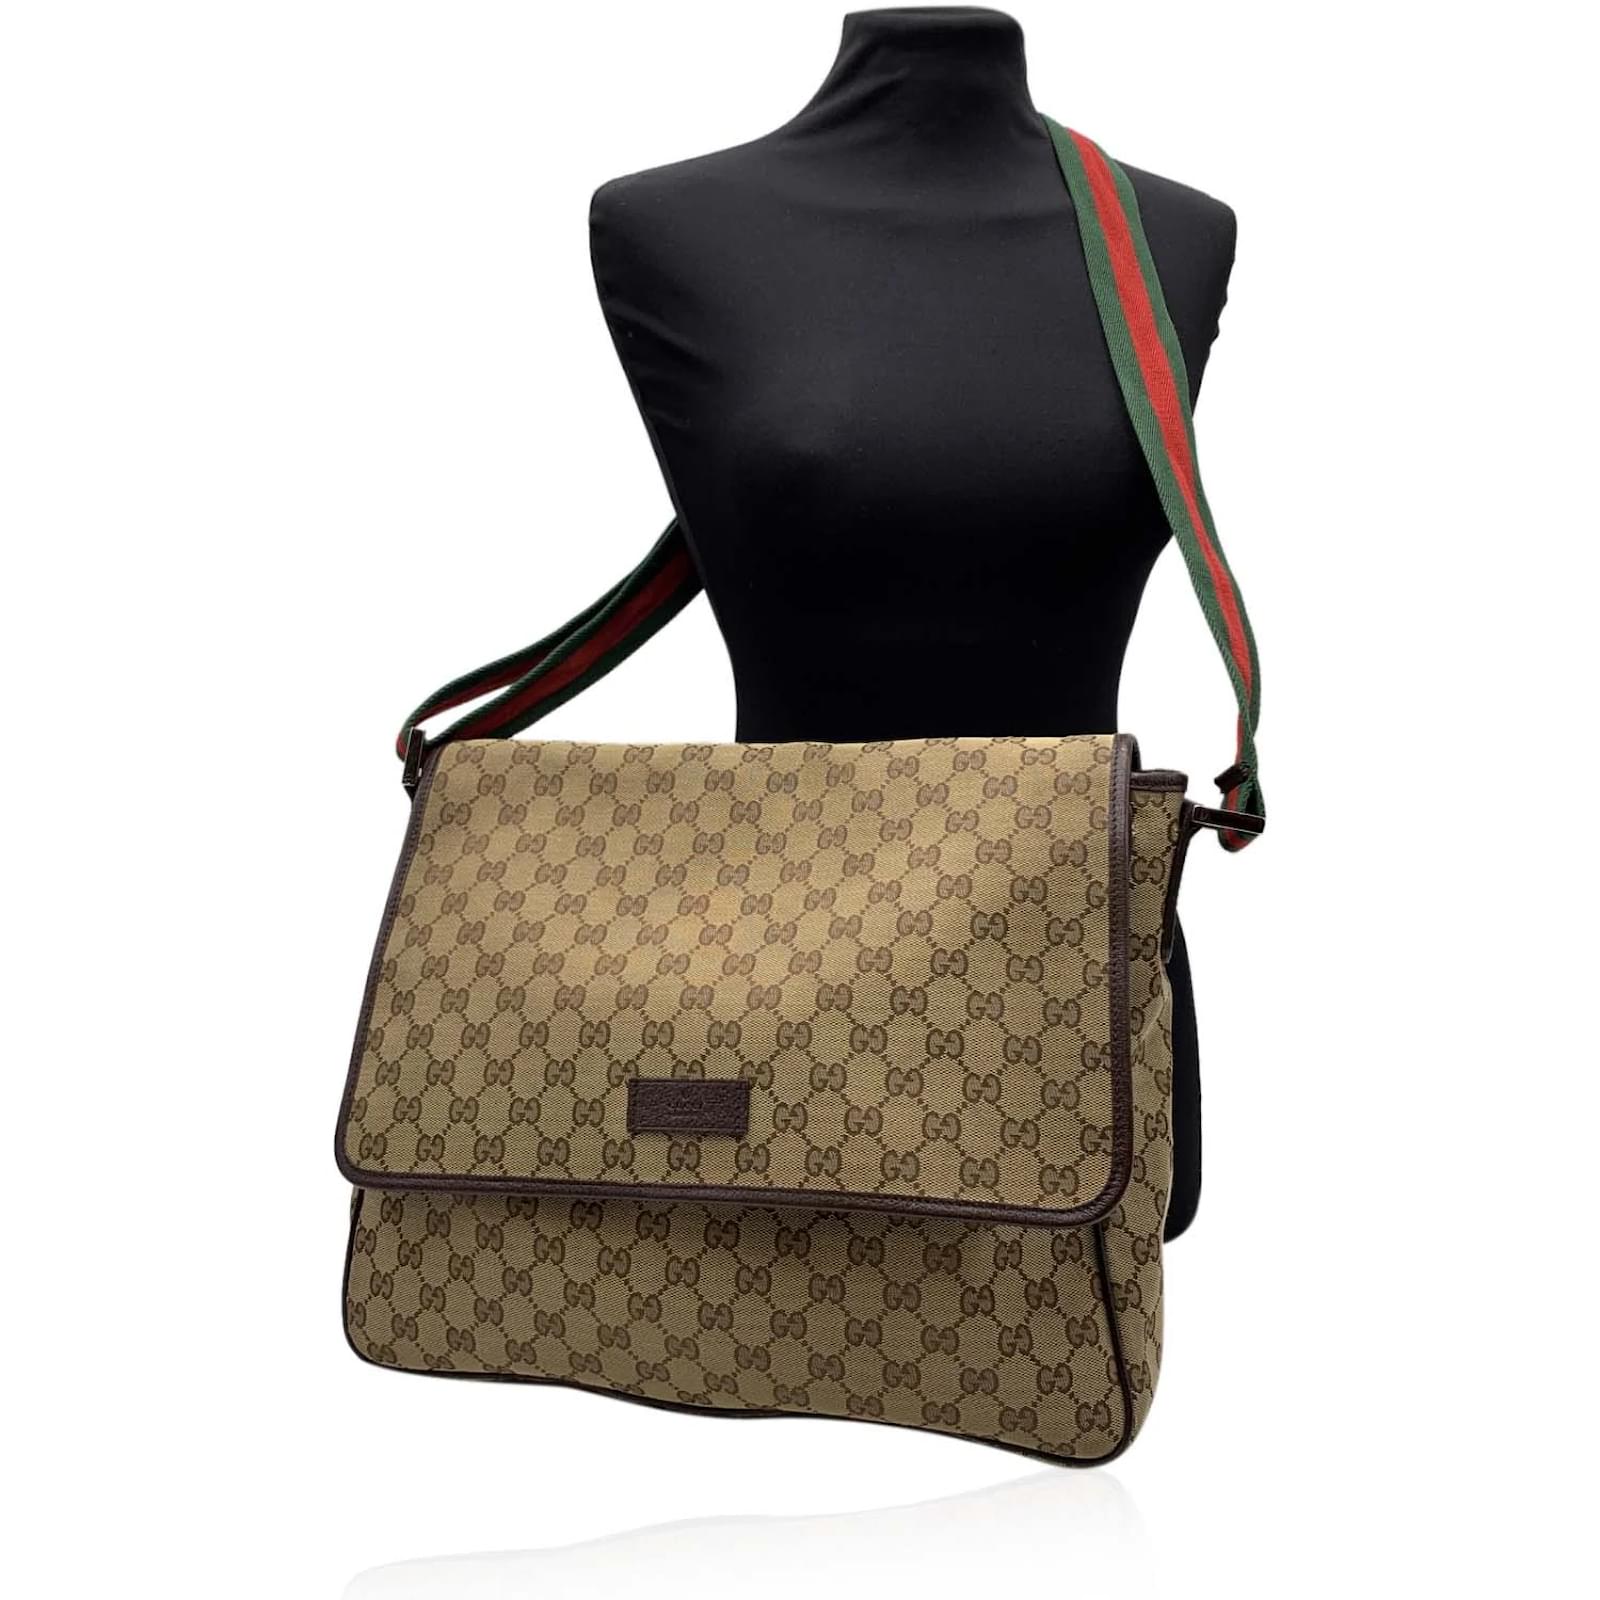 Gucci Beige Monogram Canvas Large Messenger Bag with Web Strap